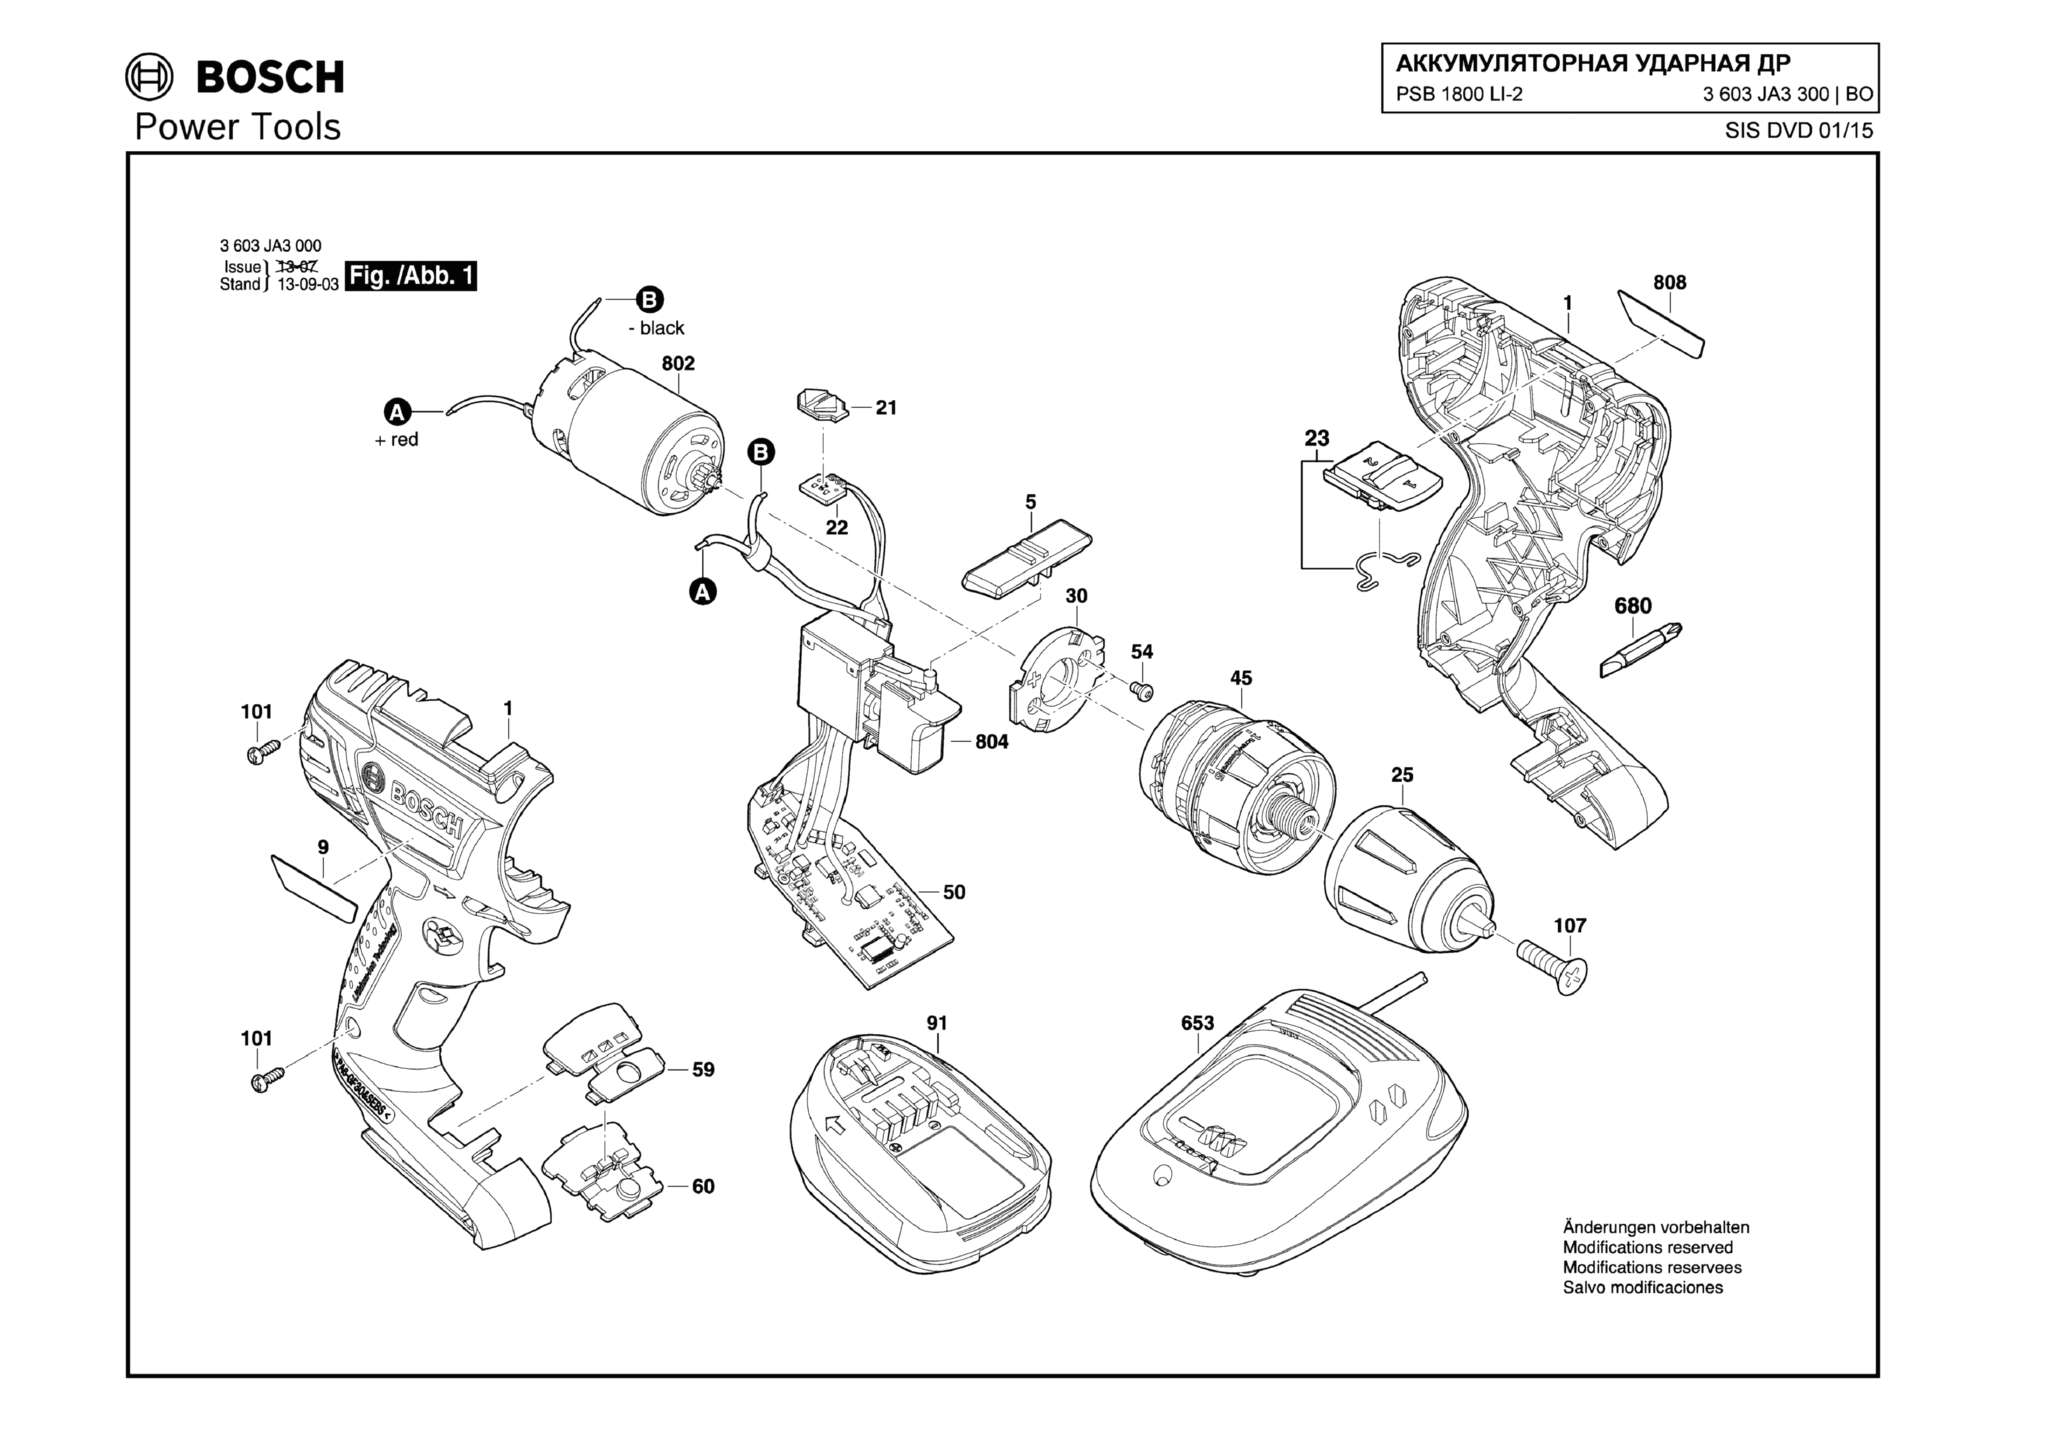 Запчасти, схема и деталировка Bosch PSB 1800 LI-2 (ТИП 3603JA3300)